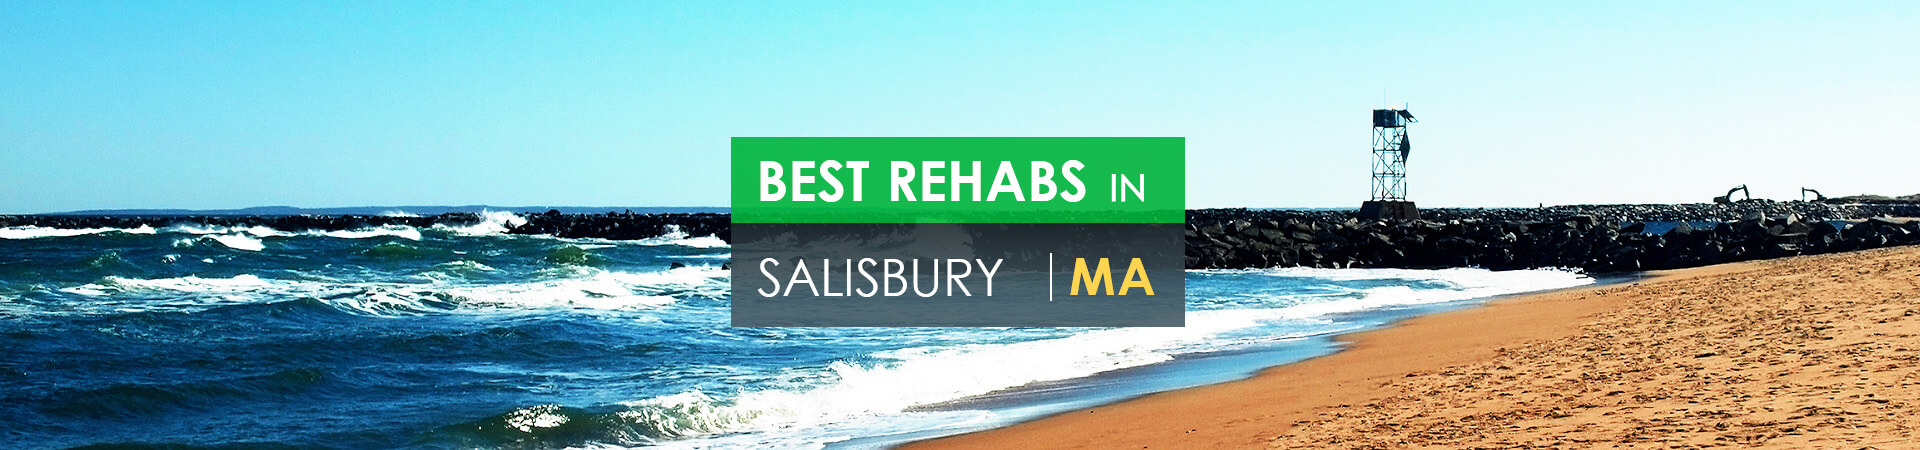 Best rehabs in Salisbury, MA